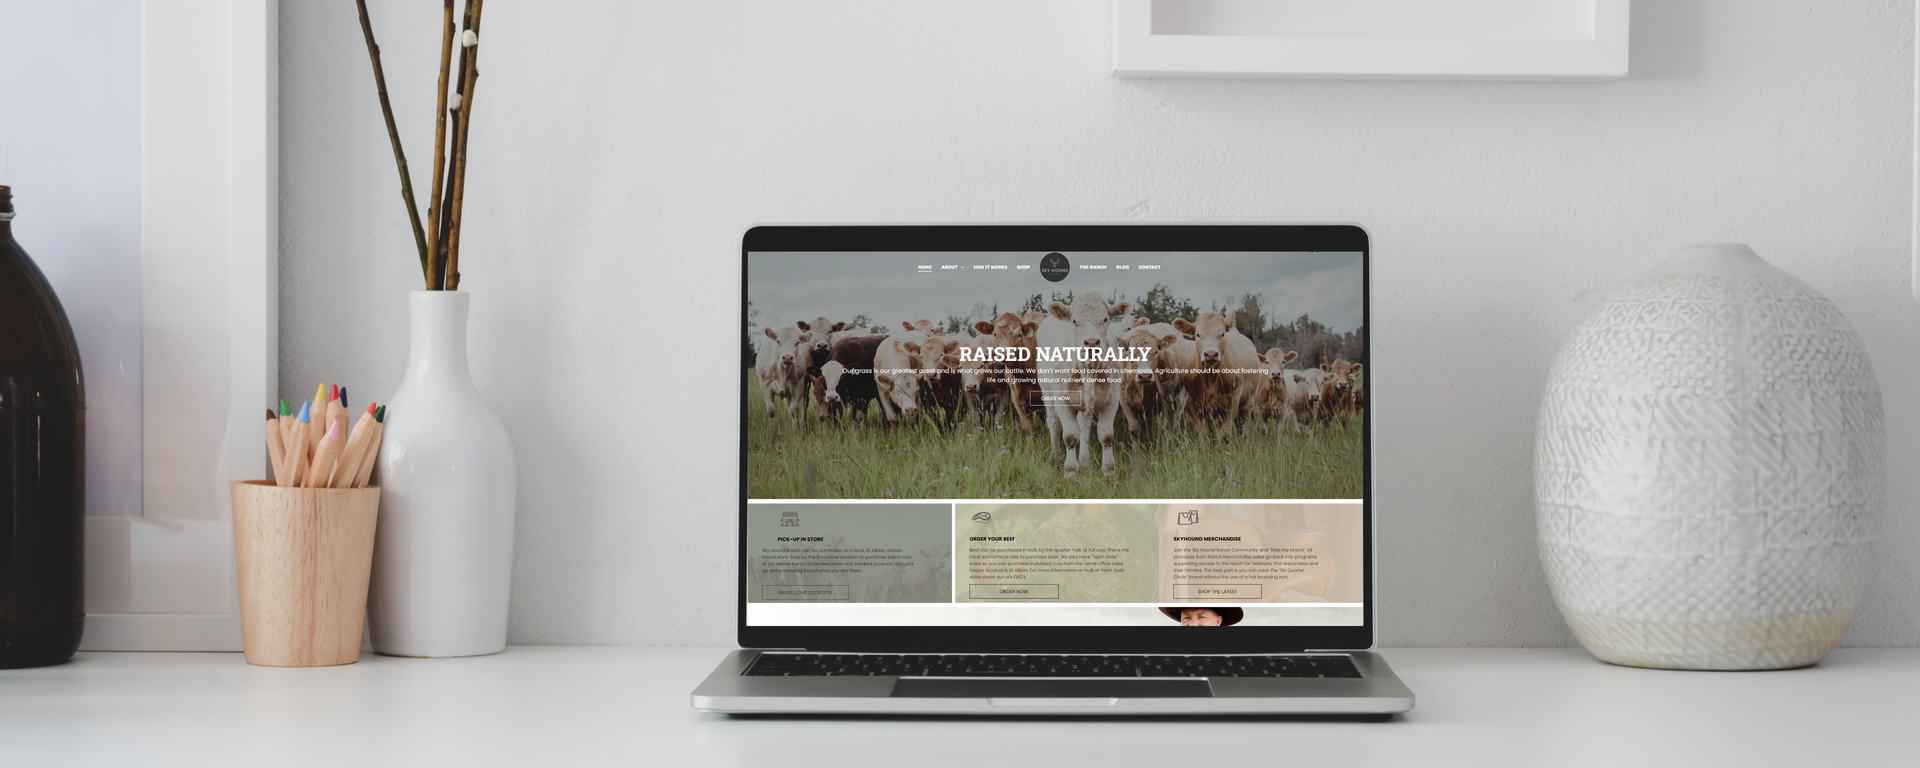 Skyhound Ranch website on laptop on desk